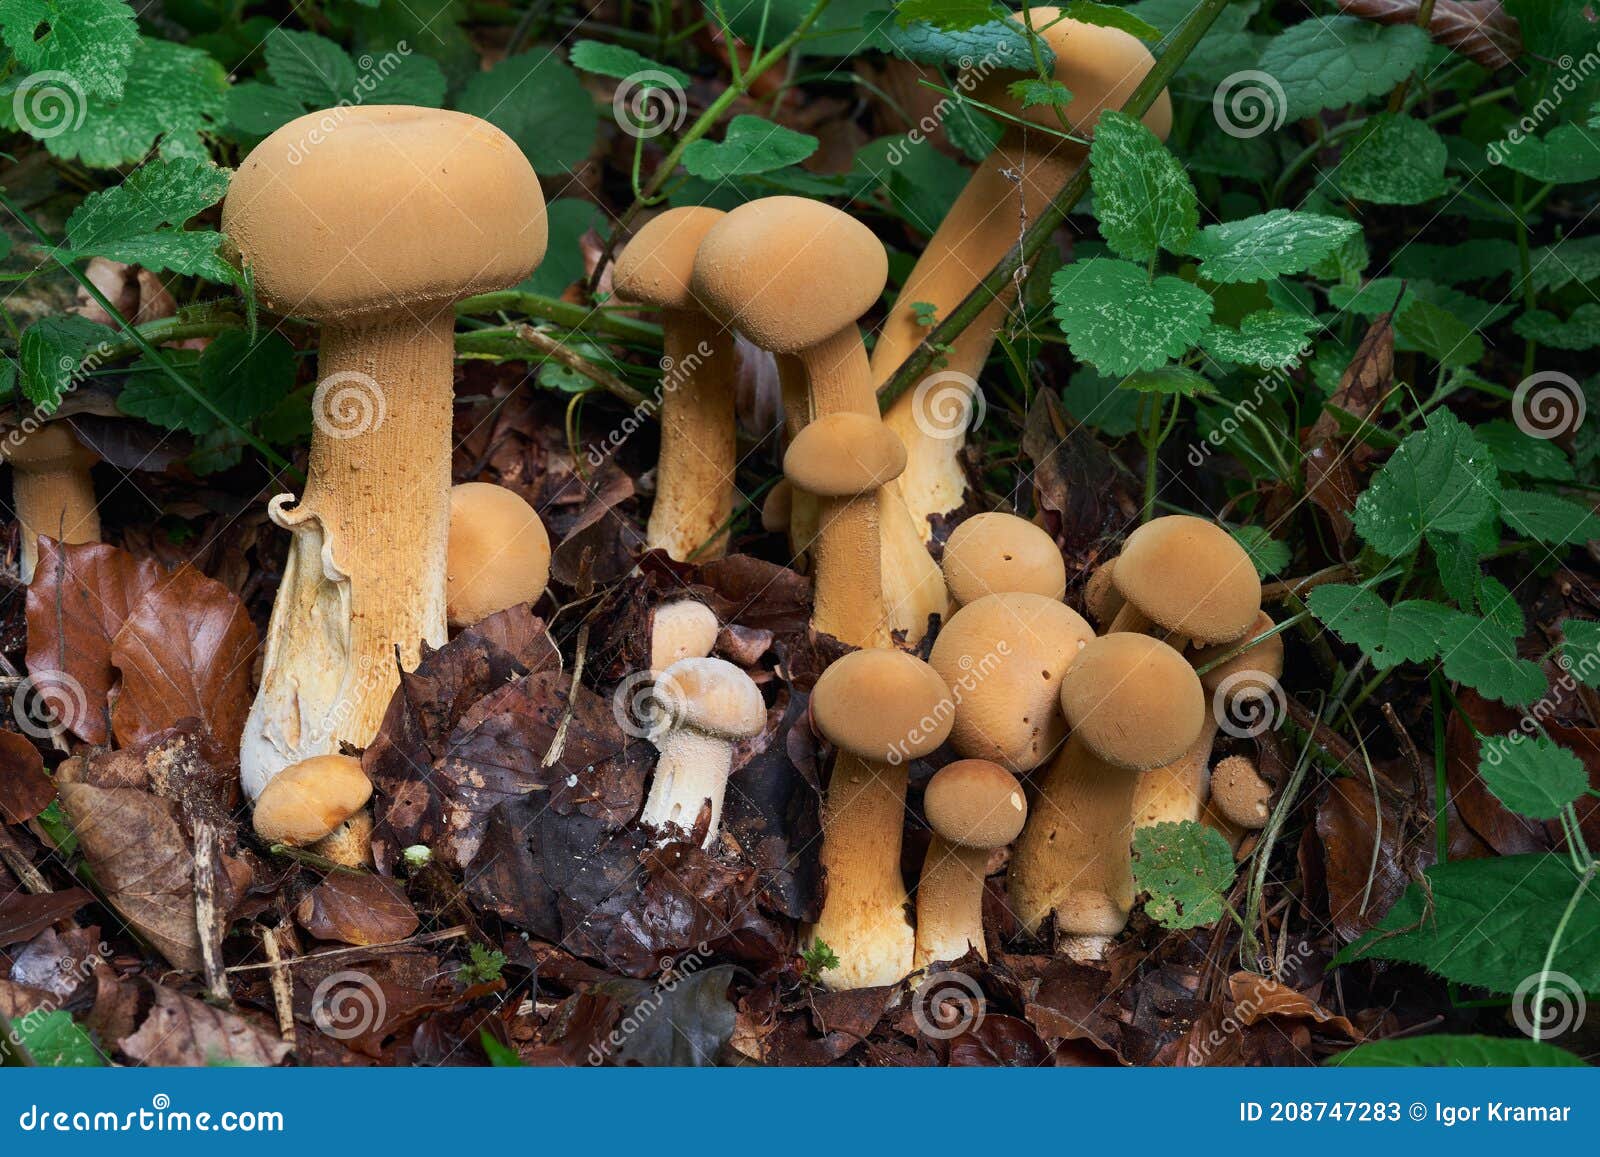 rare mushroom phaeolepiota aurea in the forest. known as golden bootleg or golden cap.